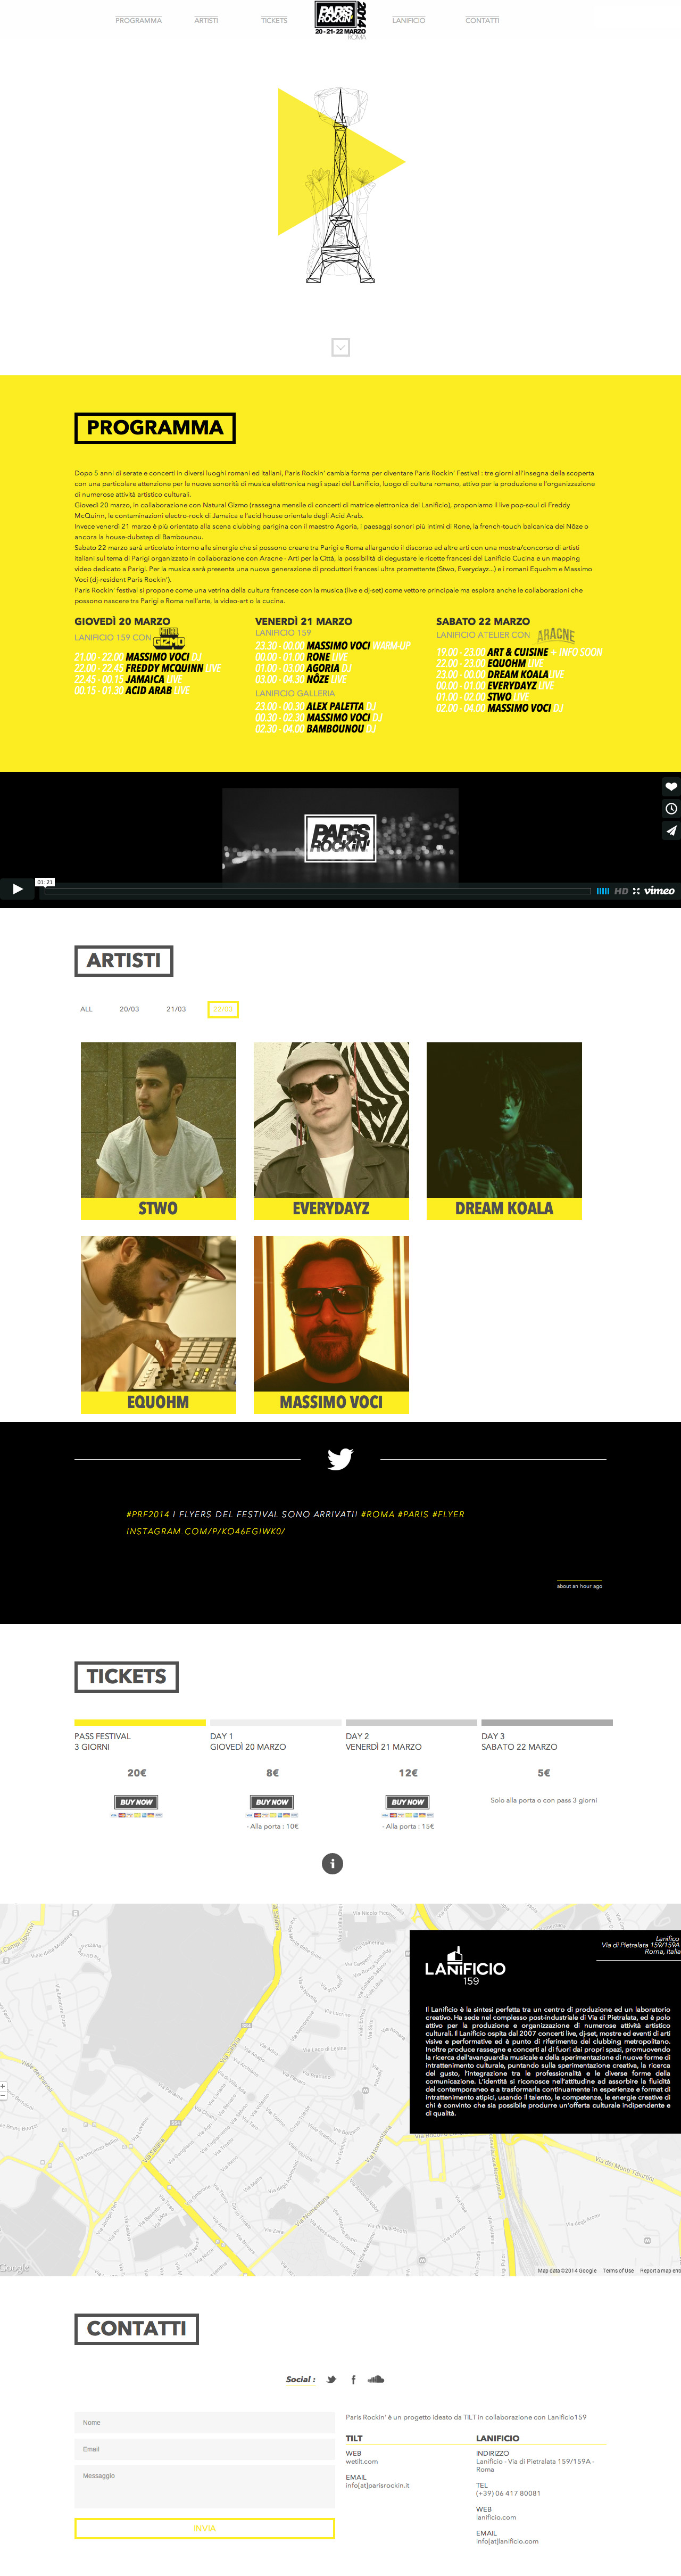 Paris Rockin’ Festival 2014 Website Screenshot